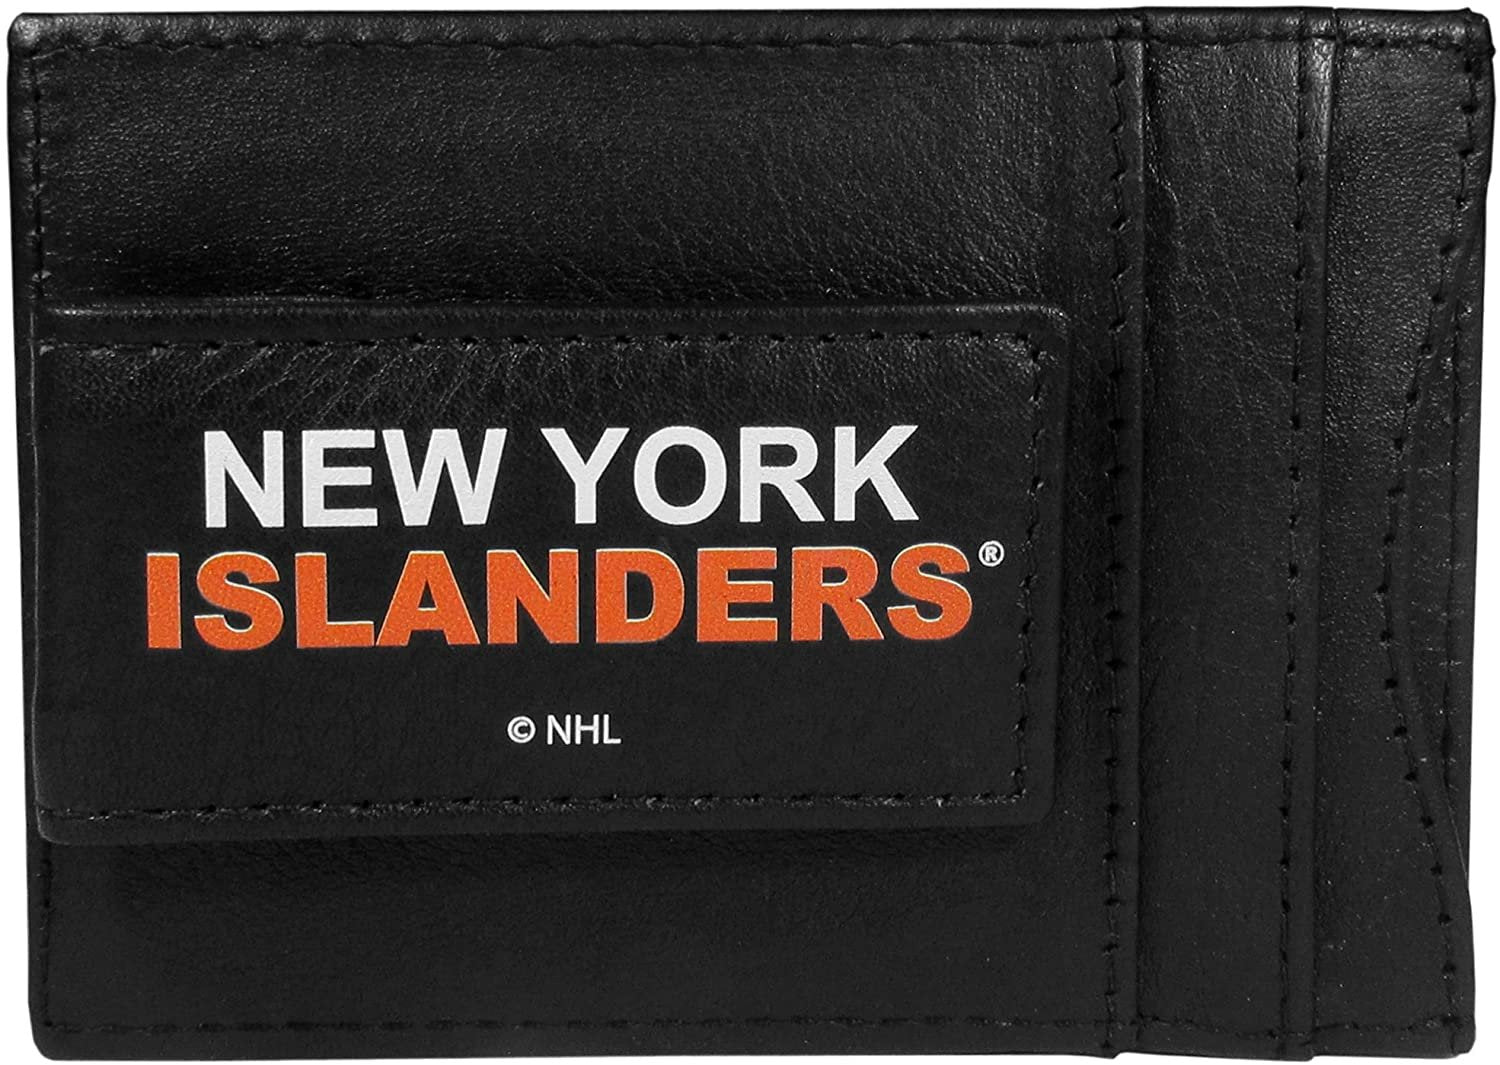 New York Islanders Black Leather Wallet, Front Pocket Magnetic Money Clip, Printed Logo